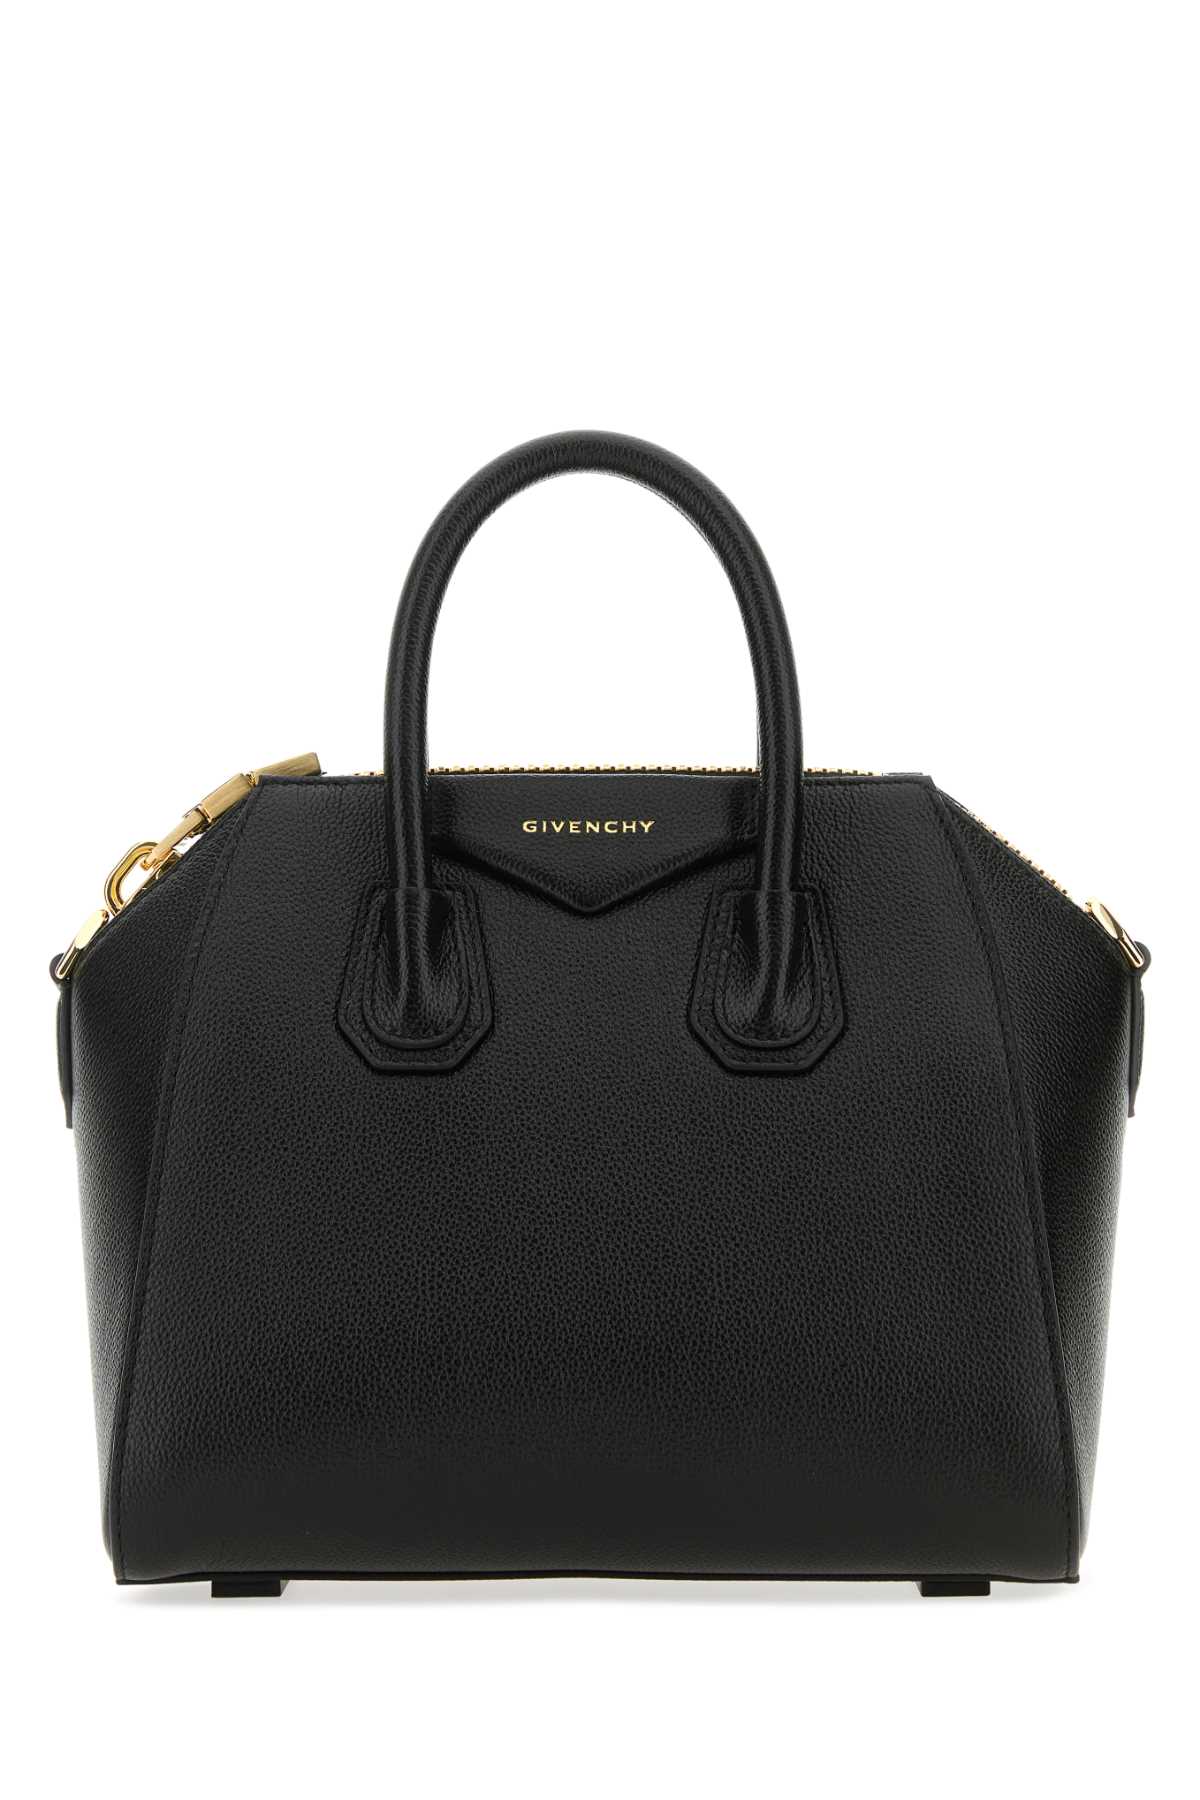 Givenchy Antigona Mini Box Leather Handbag In Black